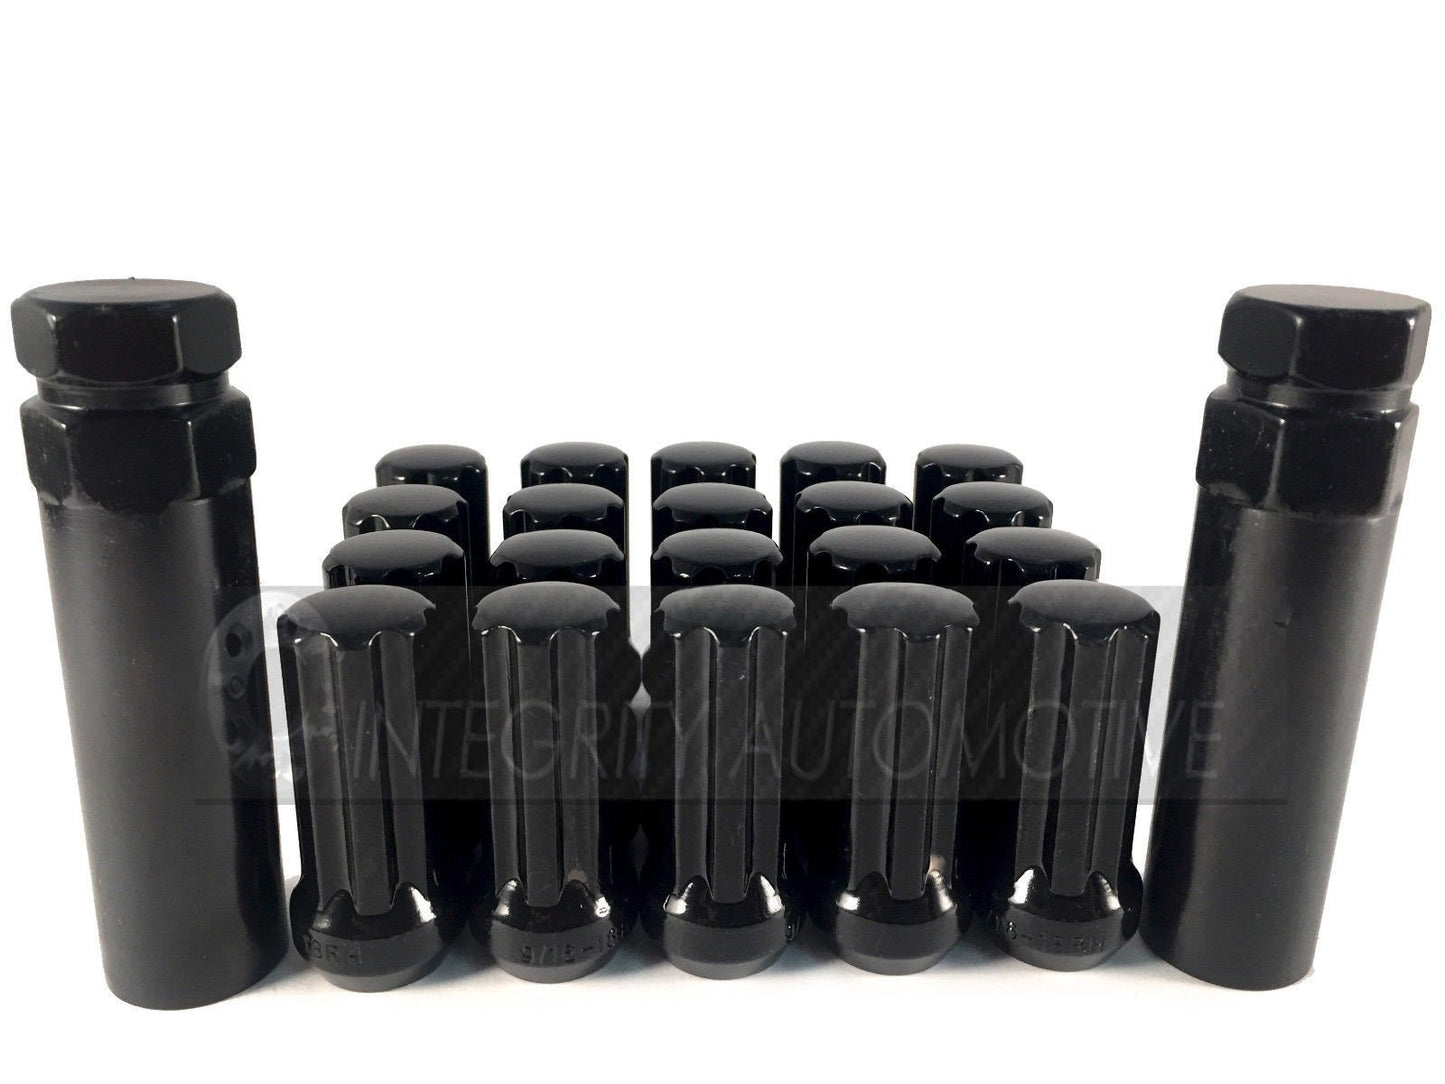 32 BLACK SPLINE LUG NUTS 14X1.5 | FITS 8 LUG CHEVY, GMC & RAM AFTERMARKET WHEELS - Wheel Adapters USA - 2